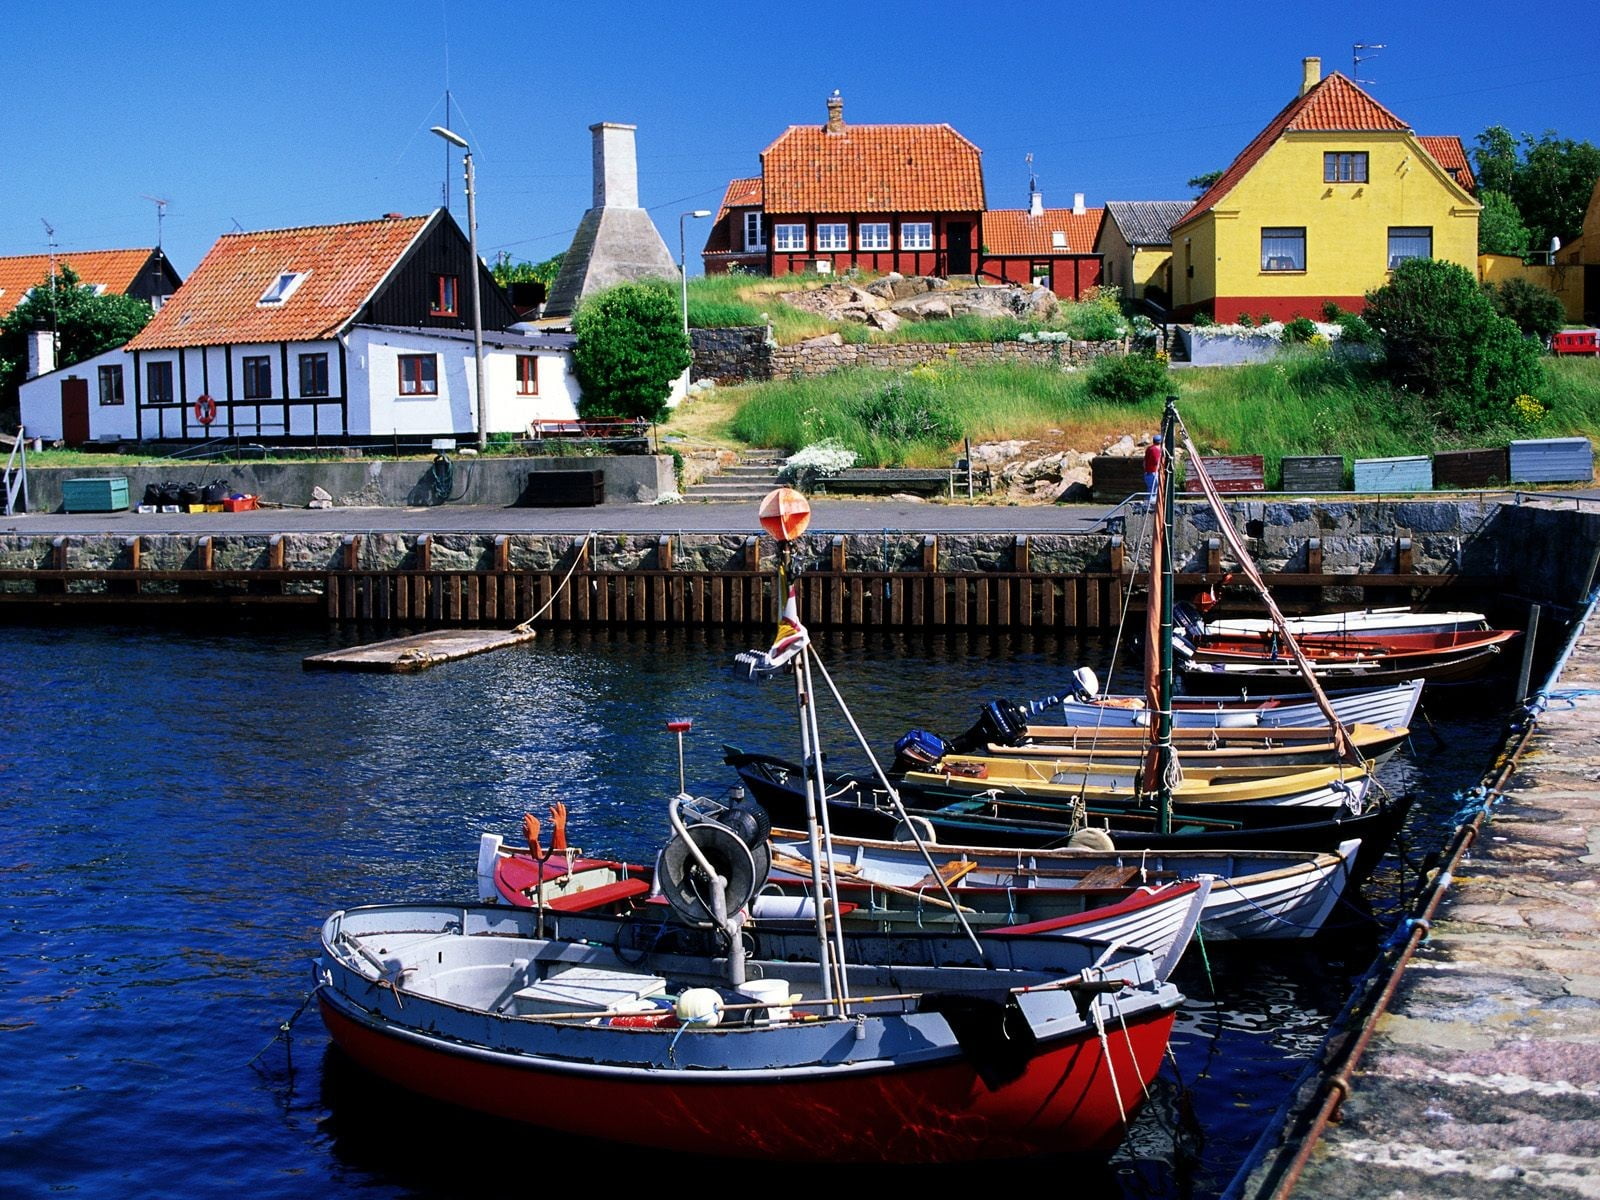 assorted-color boat lot, ports, boat, house, Denmark